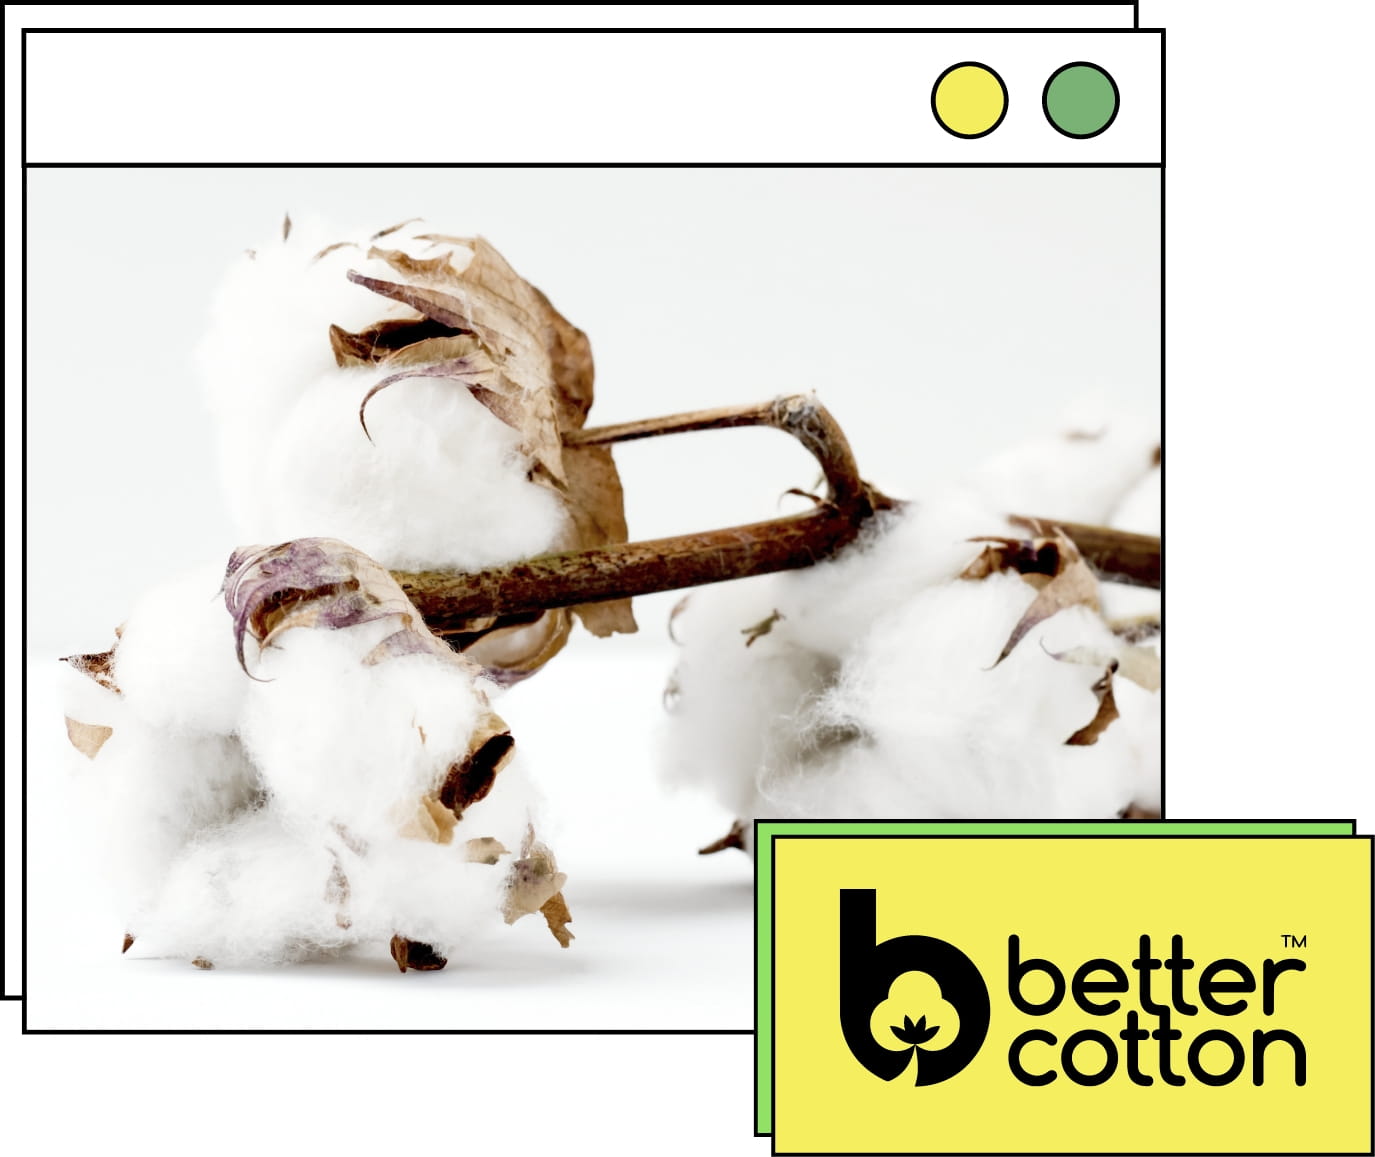 Better Cotton